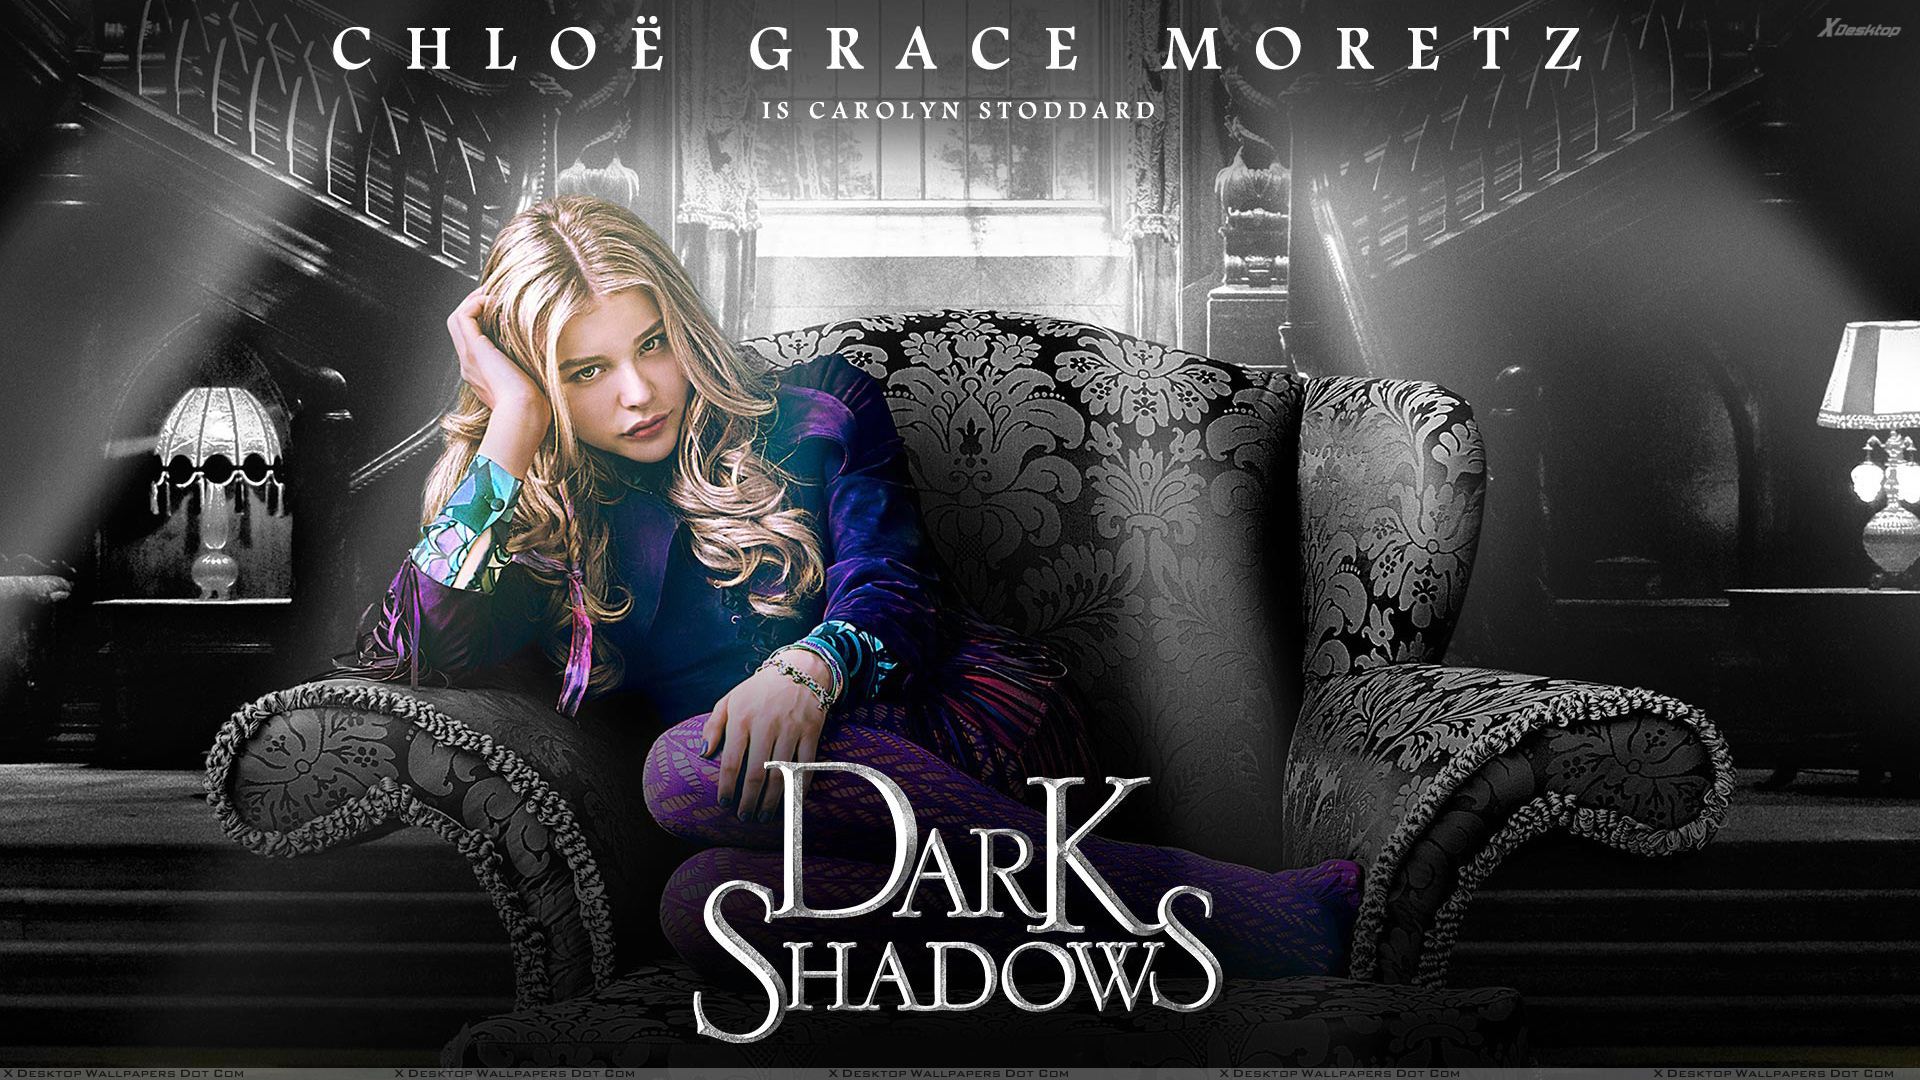 Chloe Grace Moretz Wallpaper Photos Image In HD